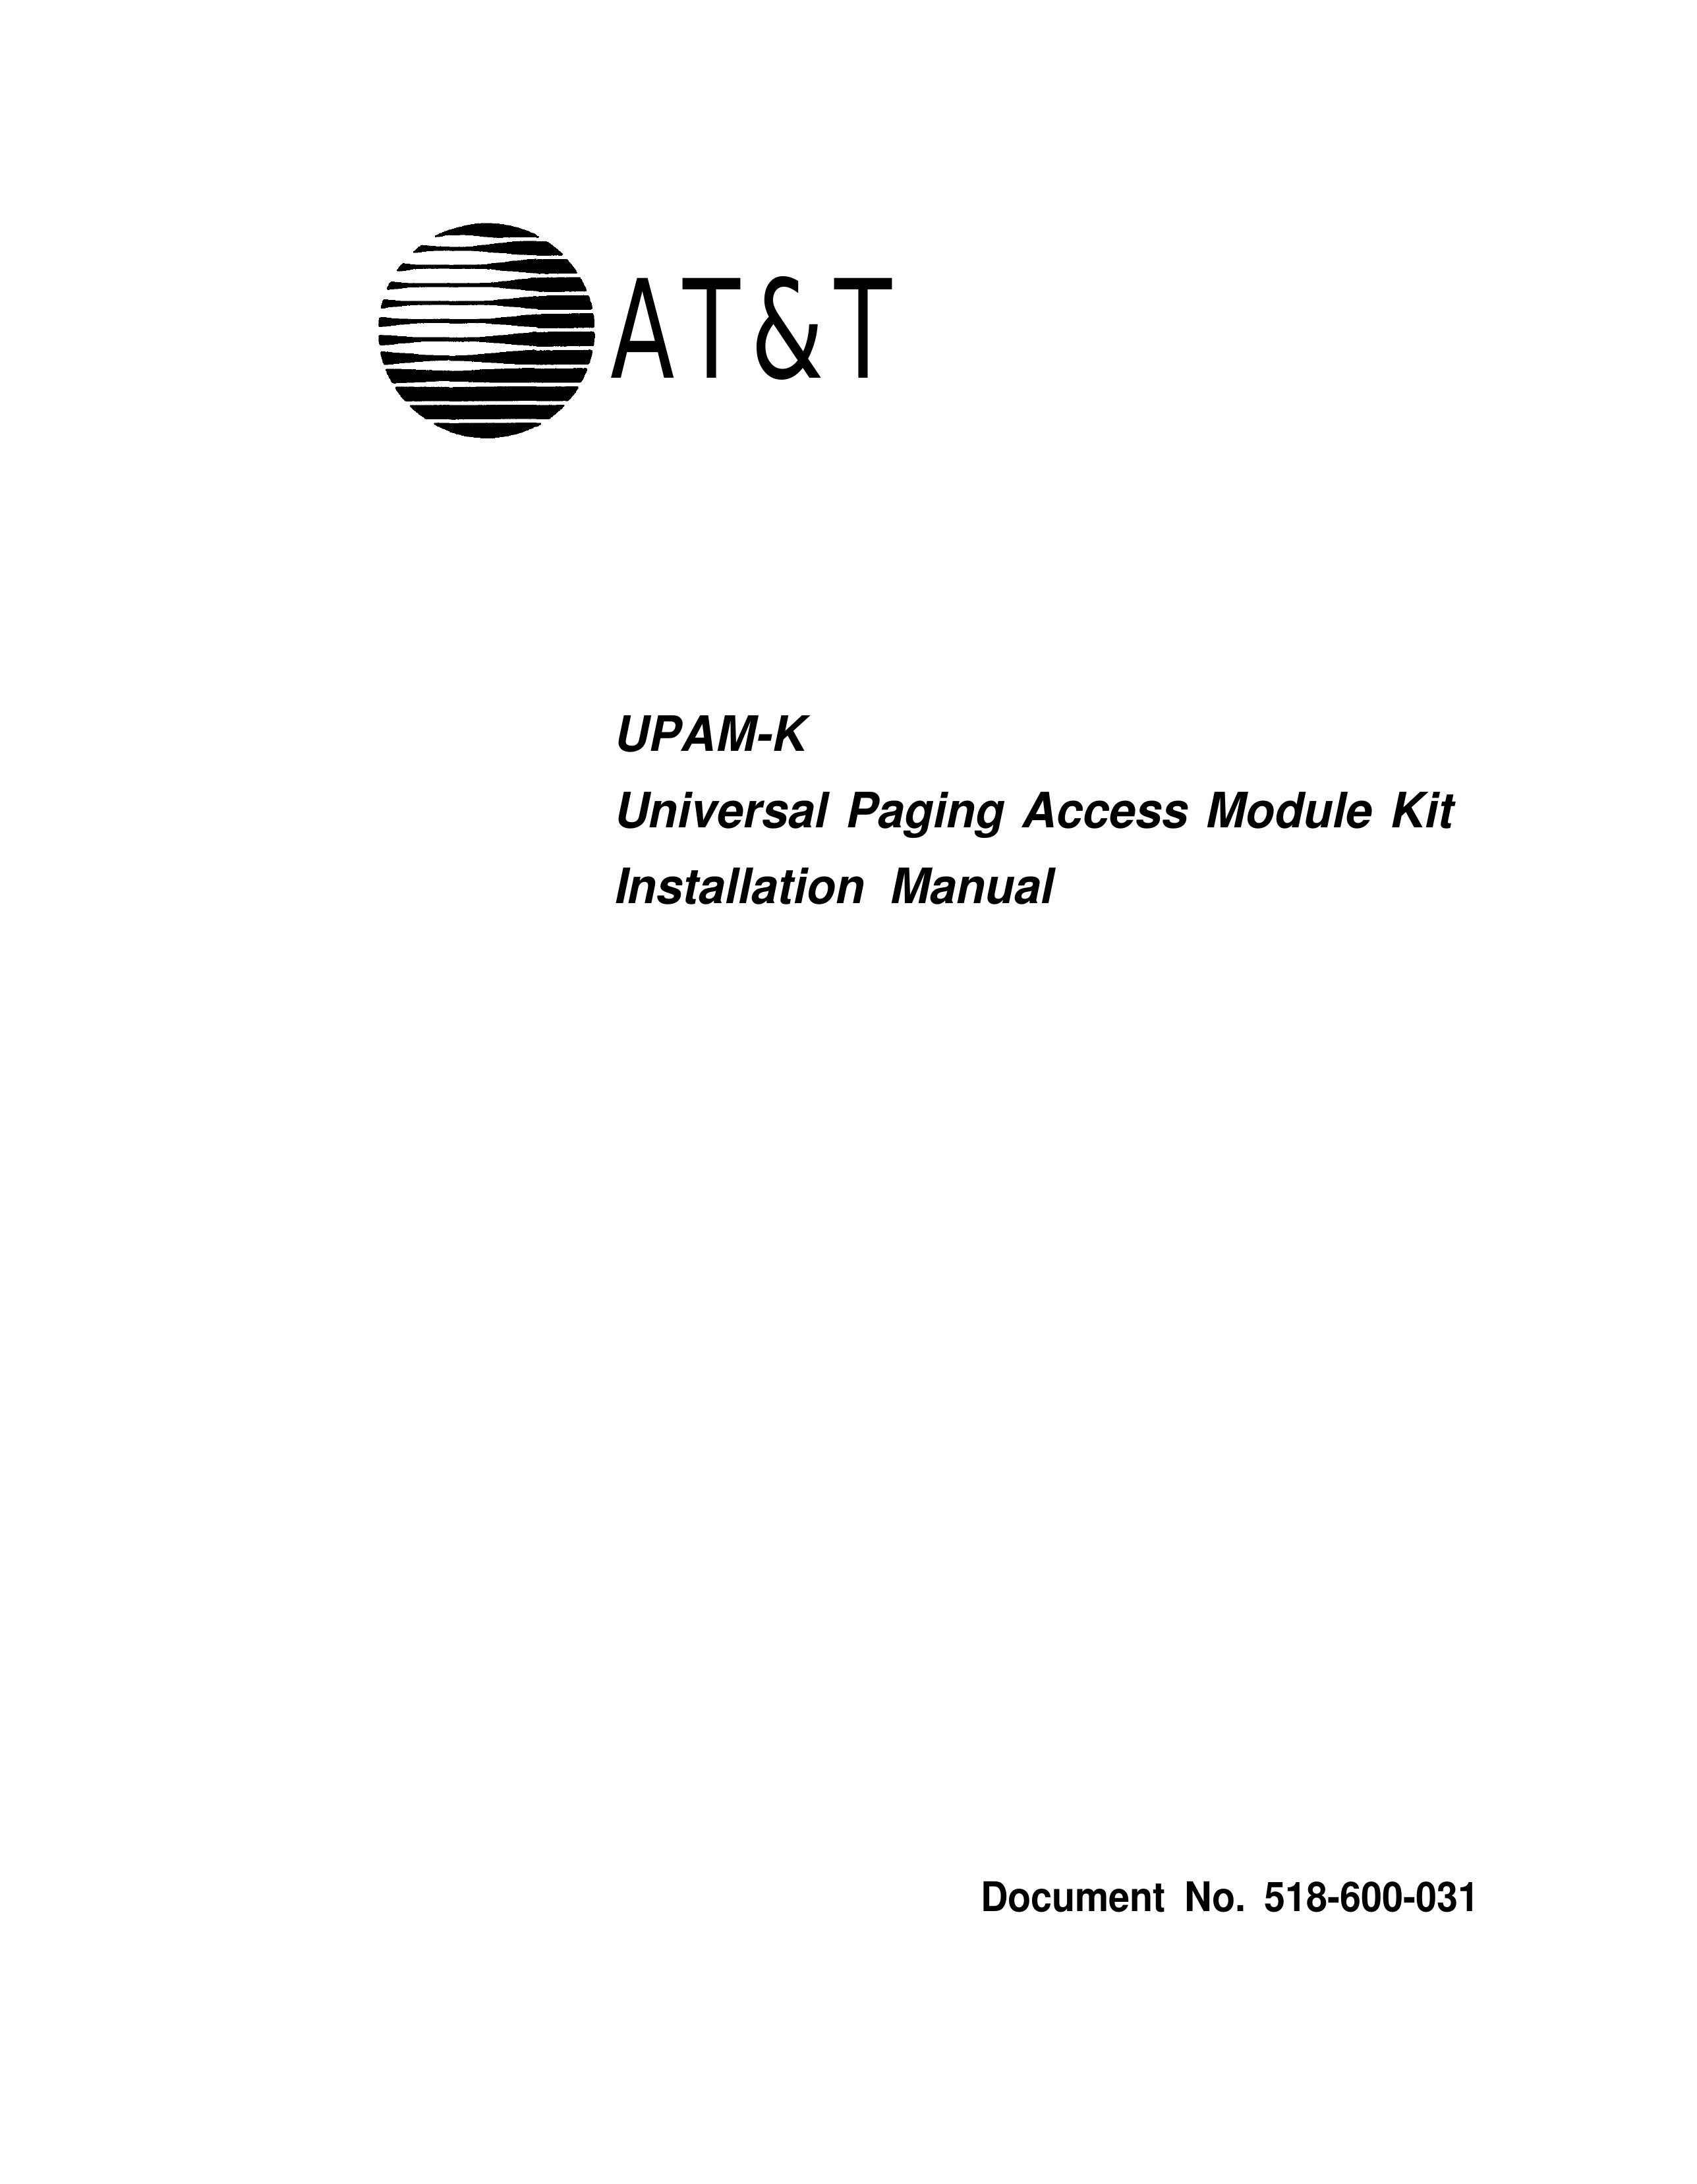 AT&T UPAM-K Drums User Manual